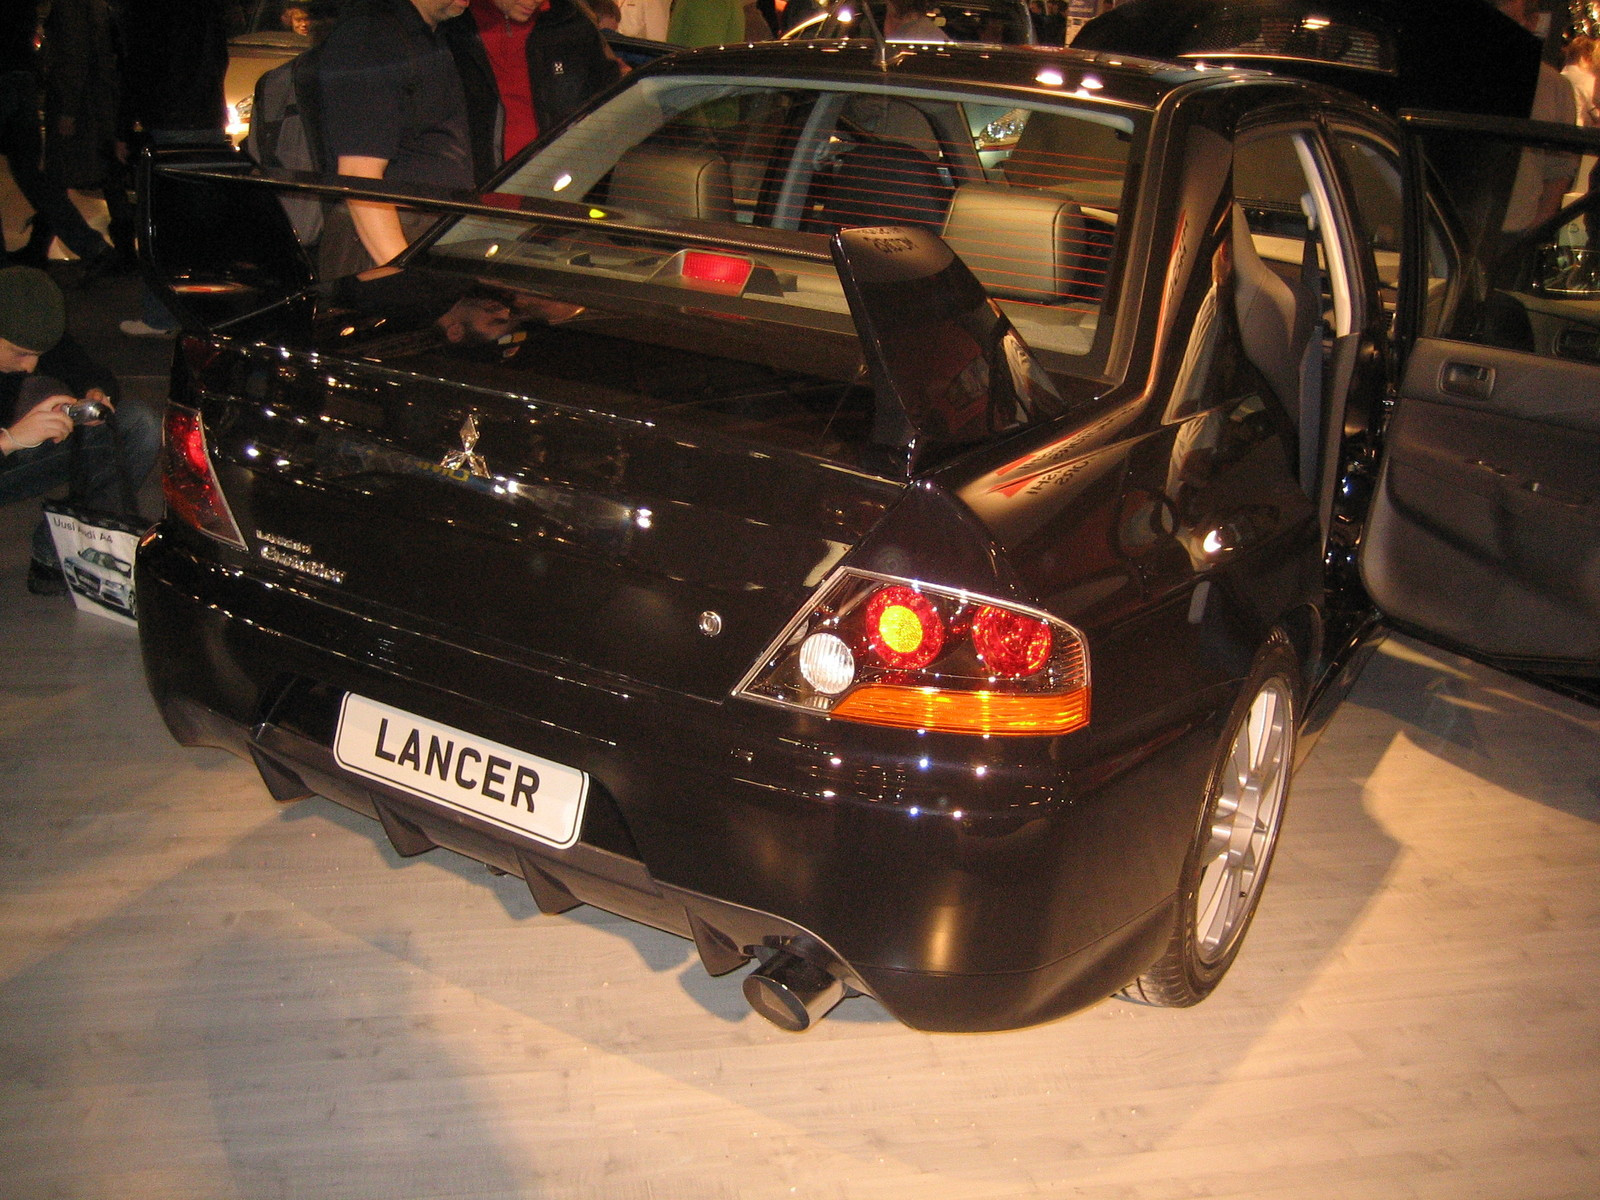 Helsinki motor show 2007, Musta Mitsubishi Lancer Evo 9